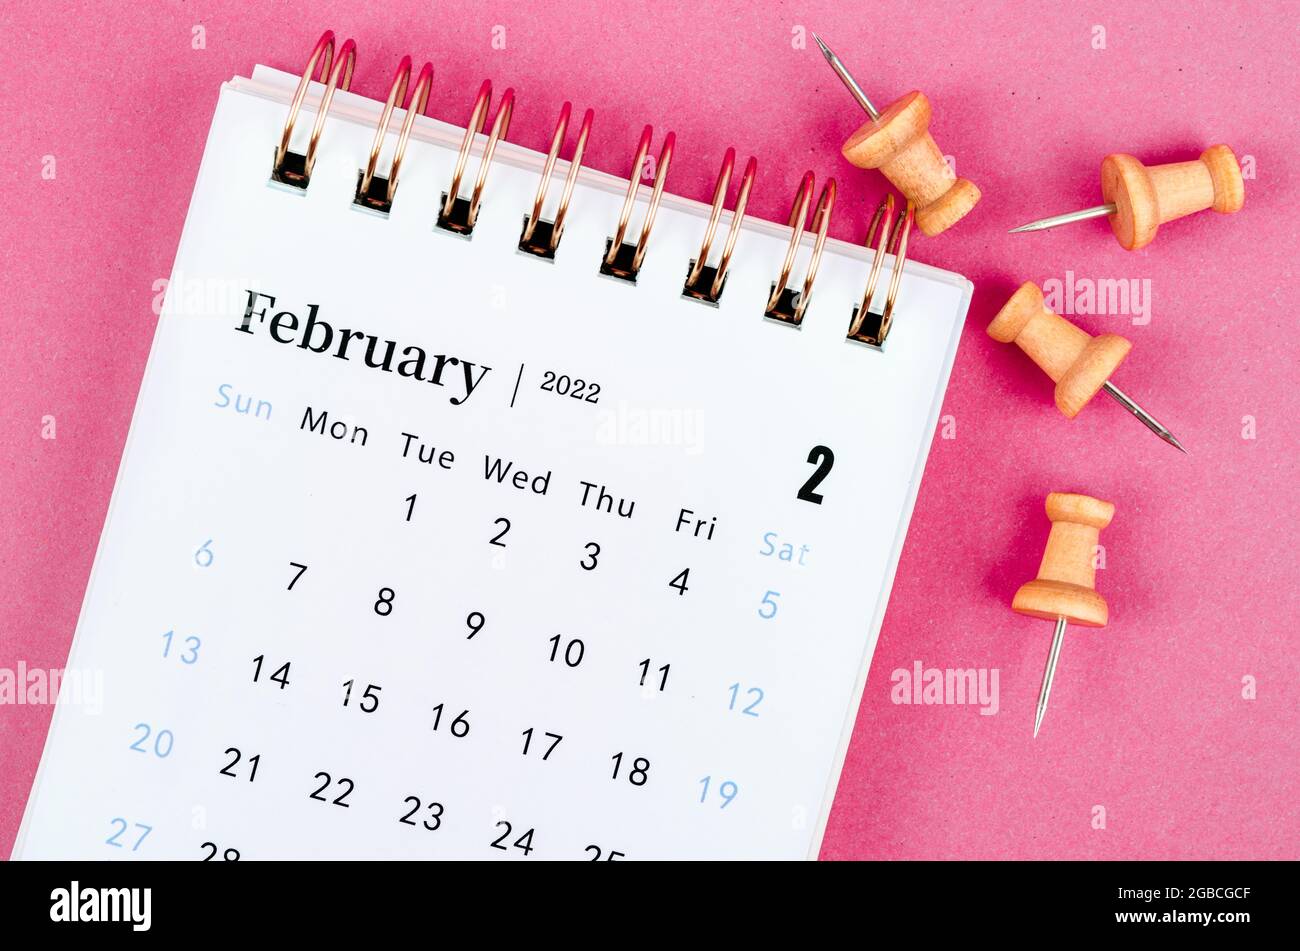 February 2022 Calendar Wallpaper 29+] February 2022 Calendar Wallpapers On Wallpapersafari